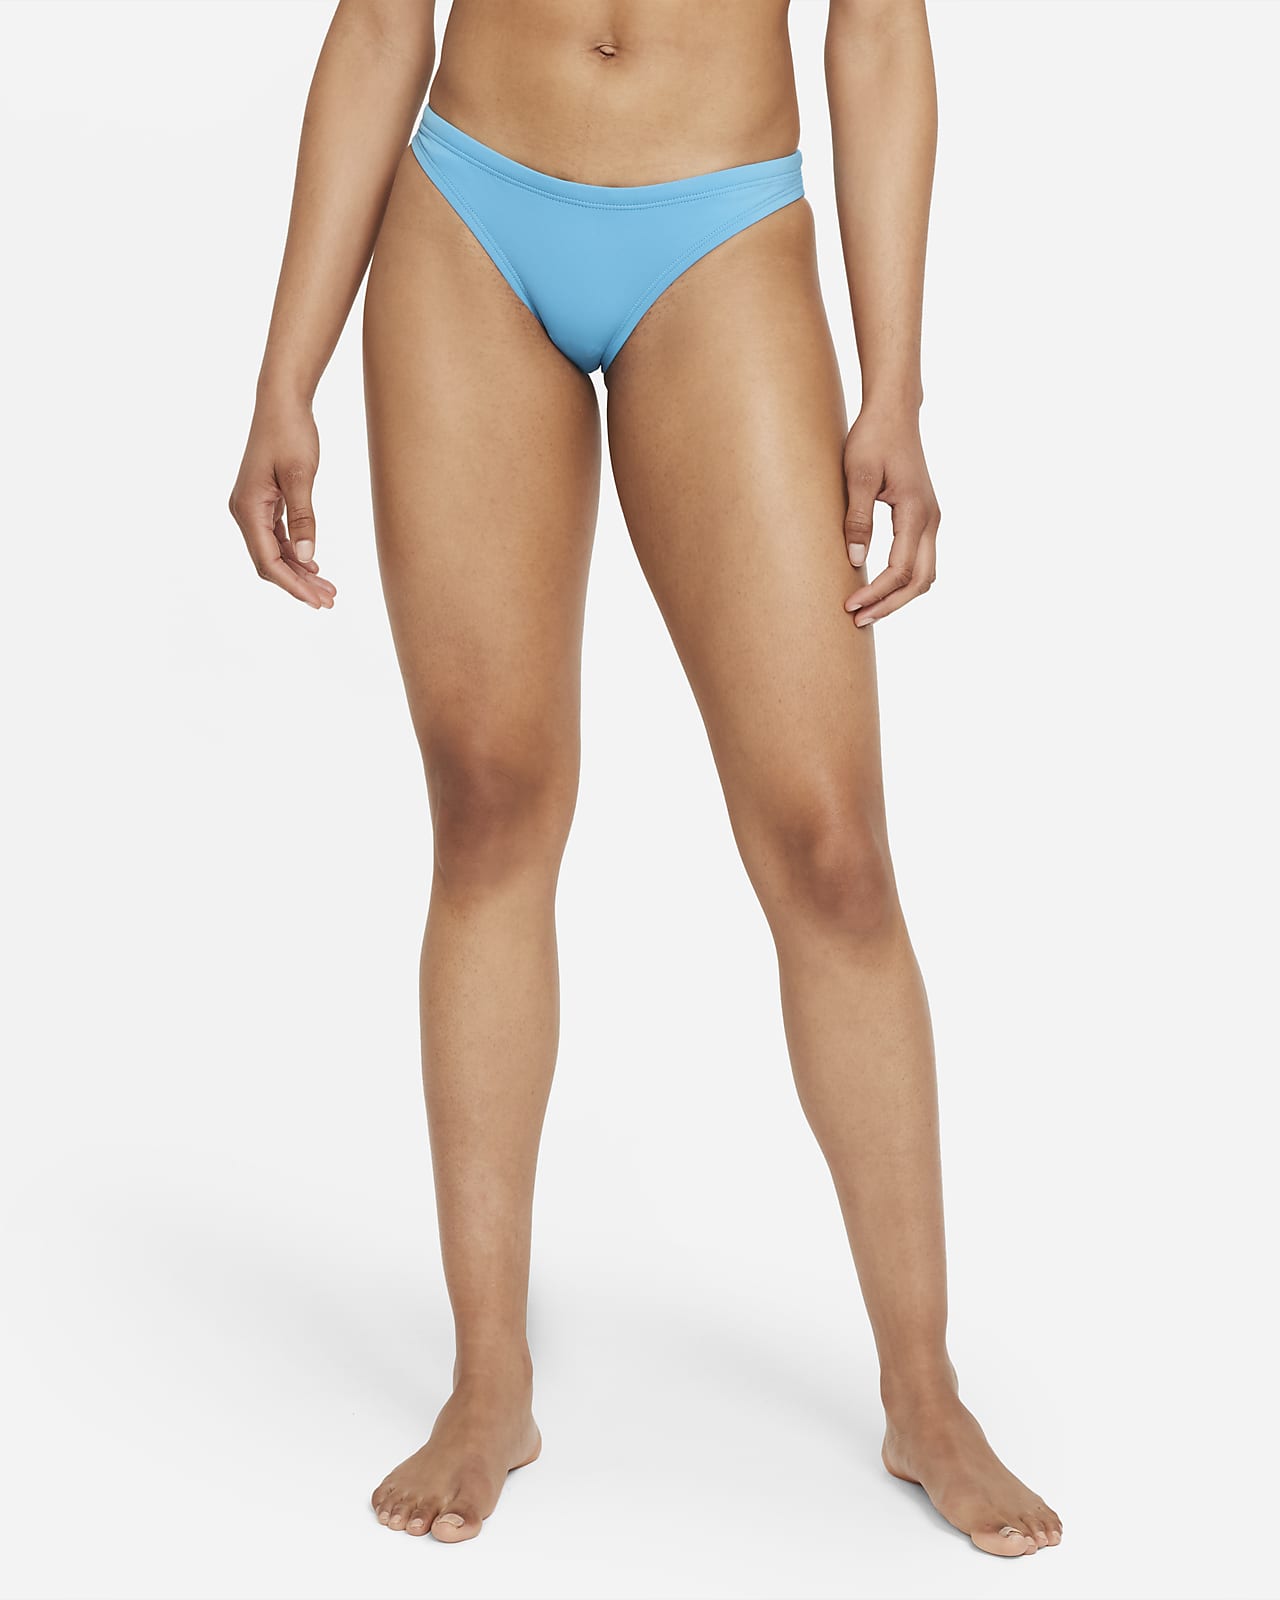 Nike Bikini Women's Swim Bottoms